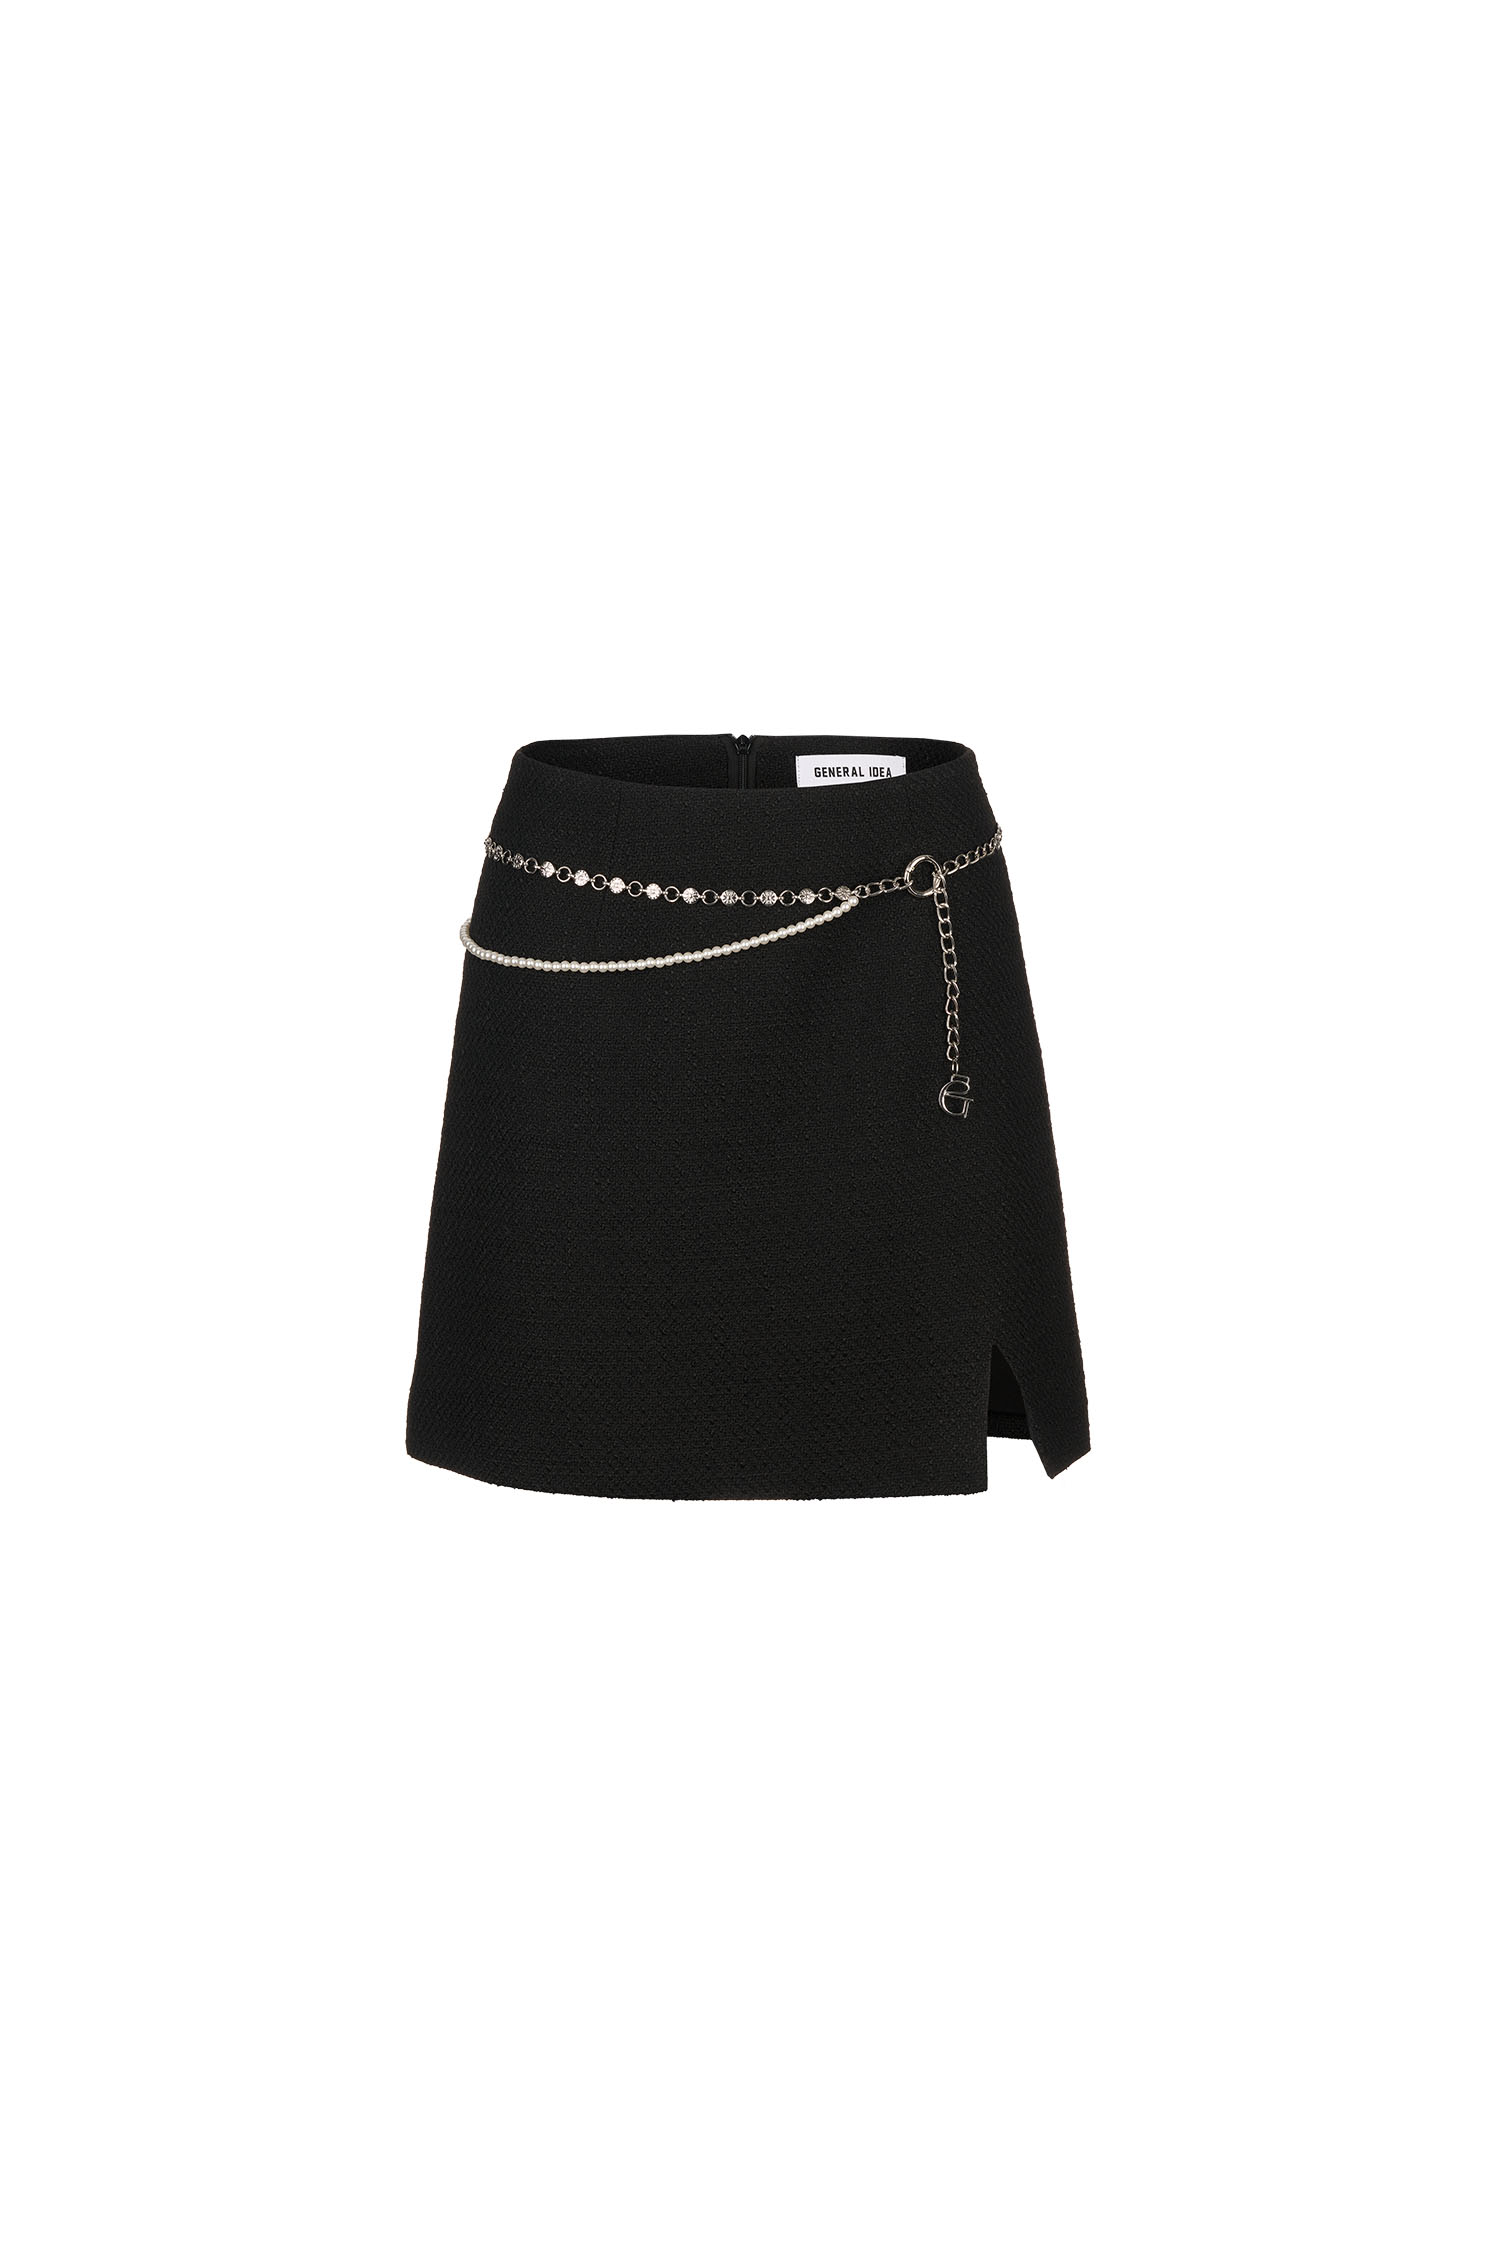 WOMAN 真珠 ベルト ツイード ミニスカート [BLACK]